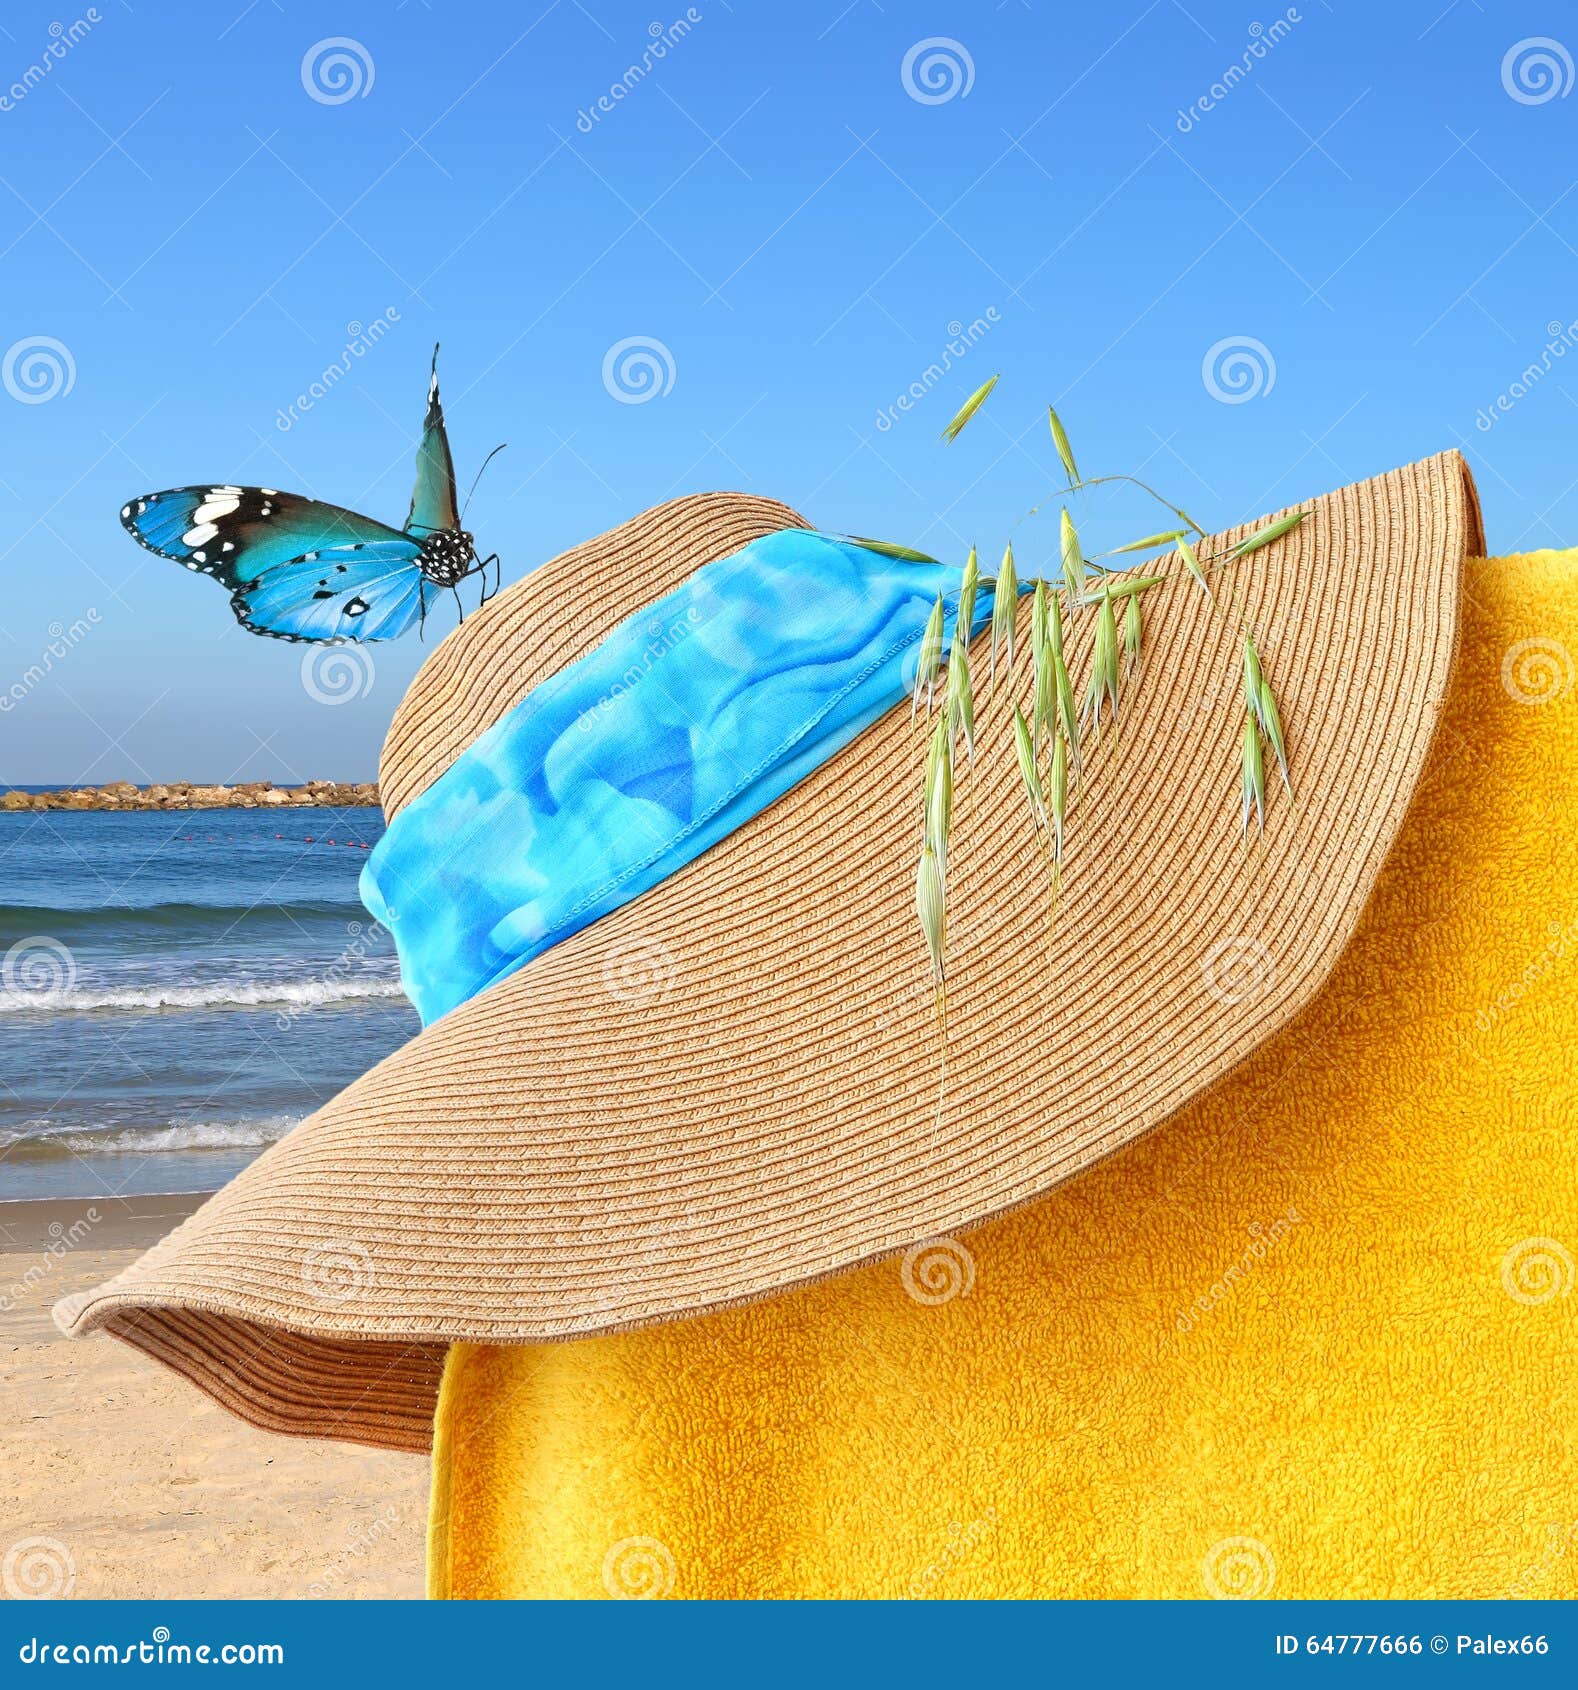 Summer dreams stock photo. Image of sunbath, fashion - 64777666